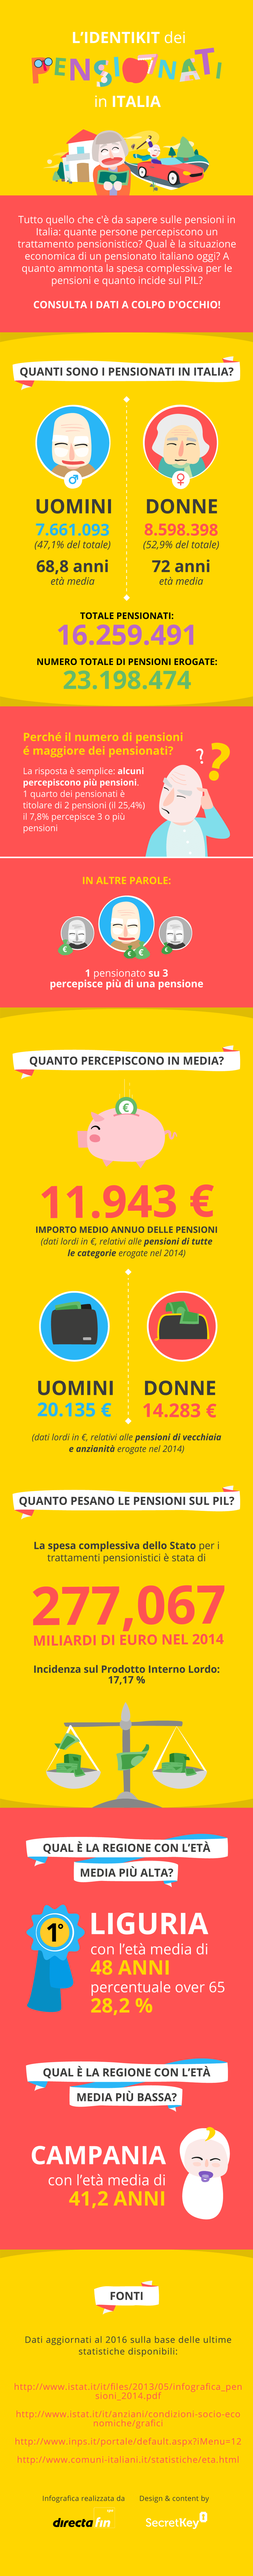 infografica Identikit dei pensionati italiani